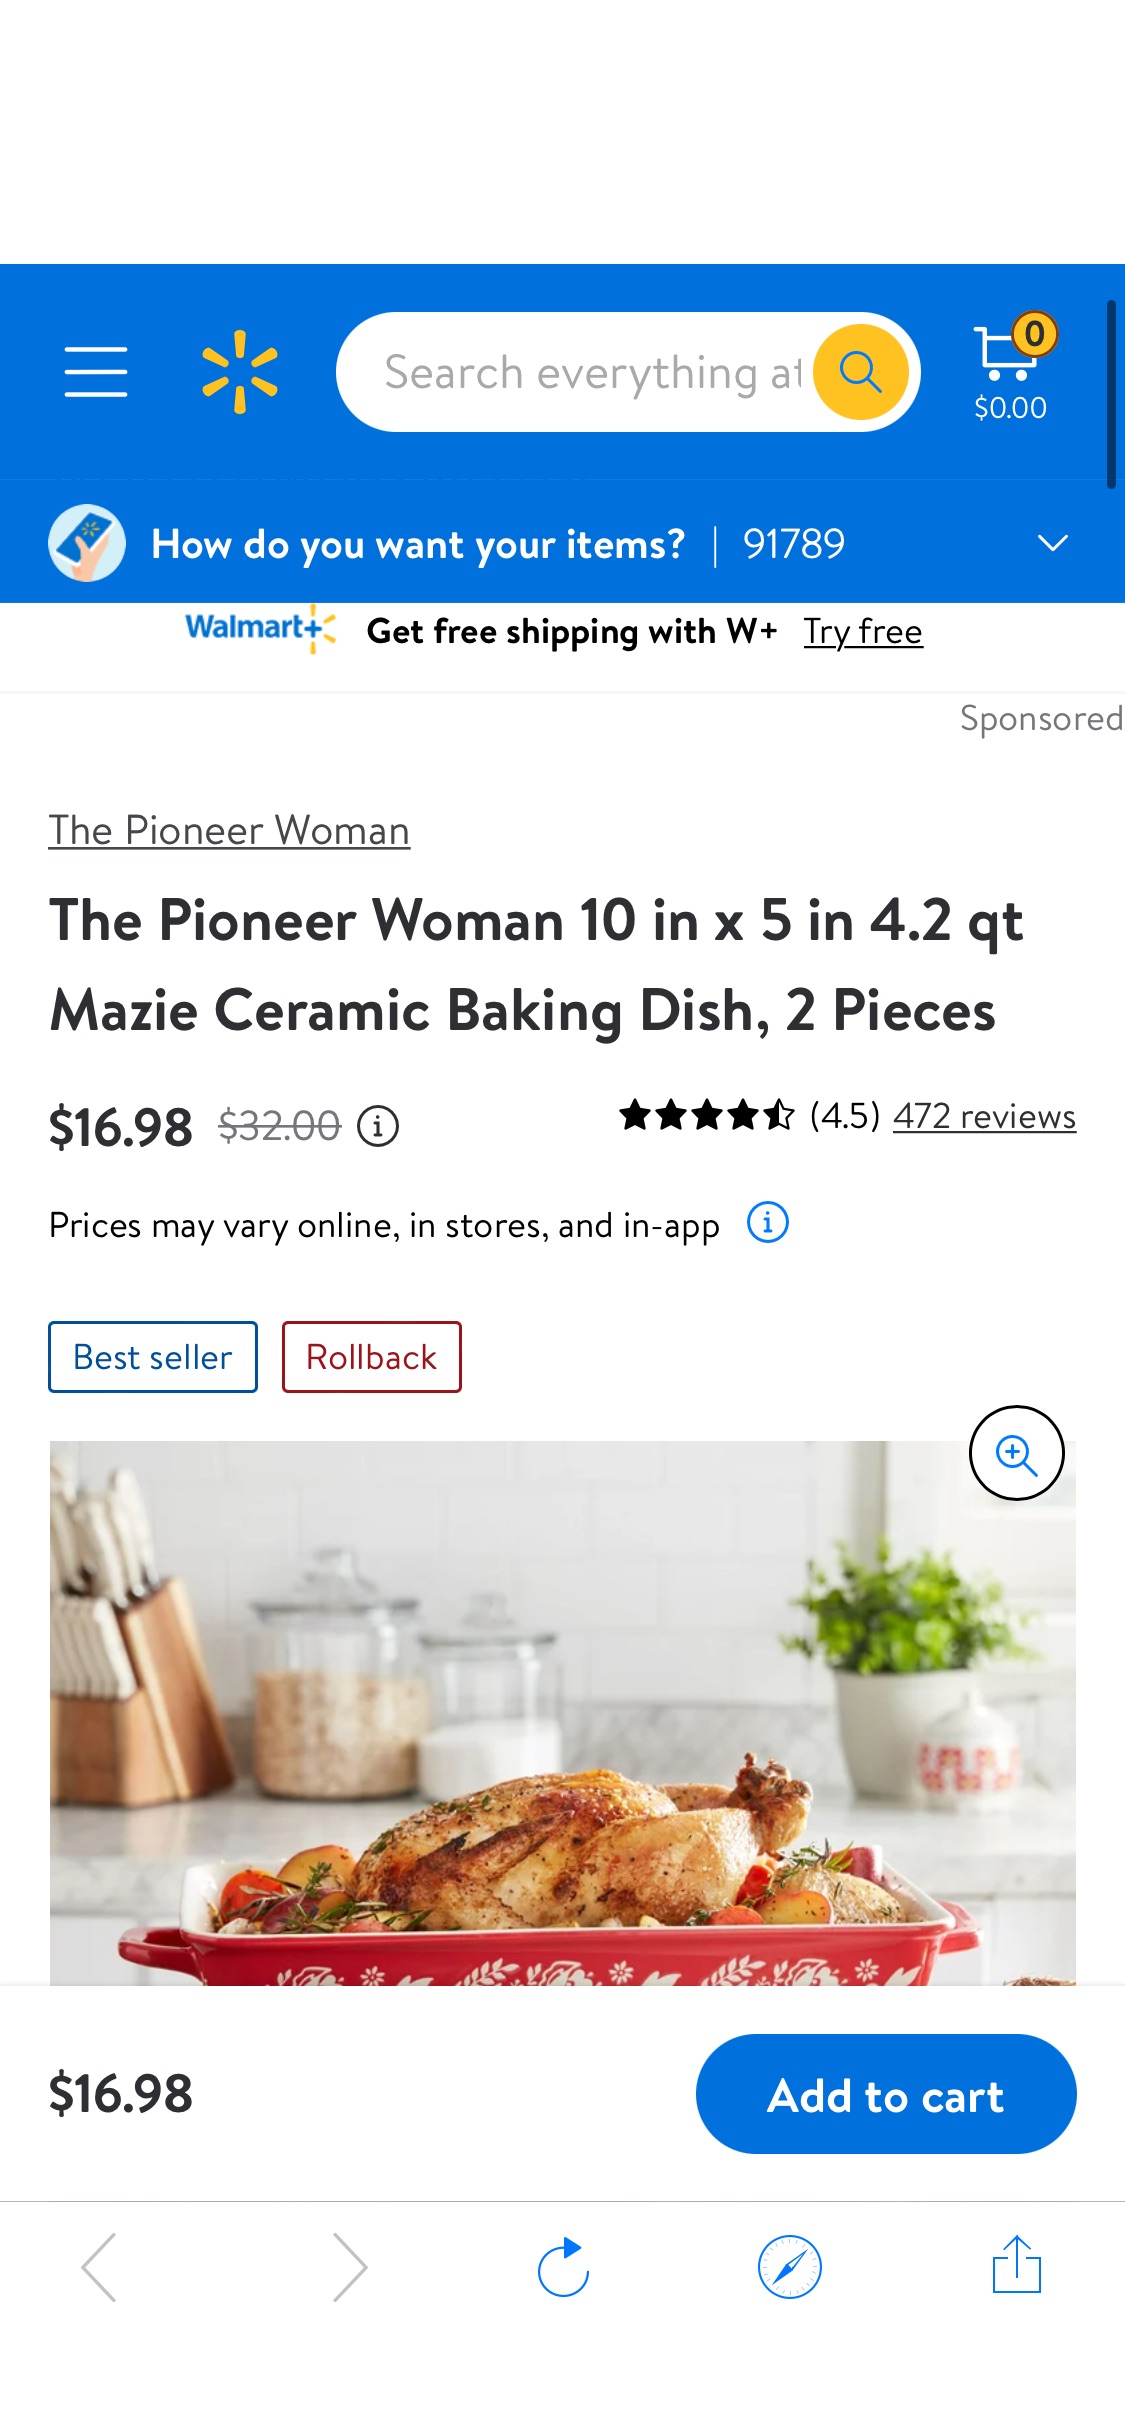 The Pioneer Woman 10 in x 5 in 4.2 qt Mazie Ceramic Baking Dish, 2 Pieces - Walmart.com